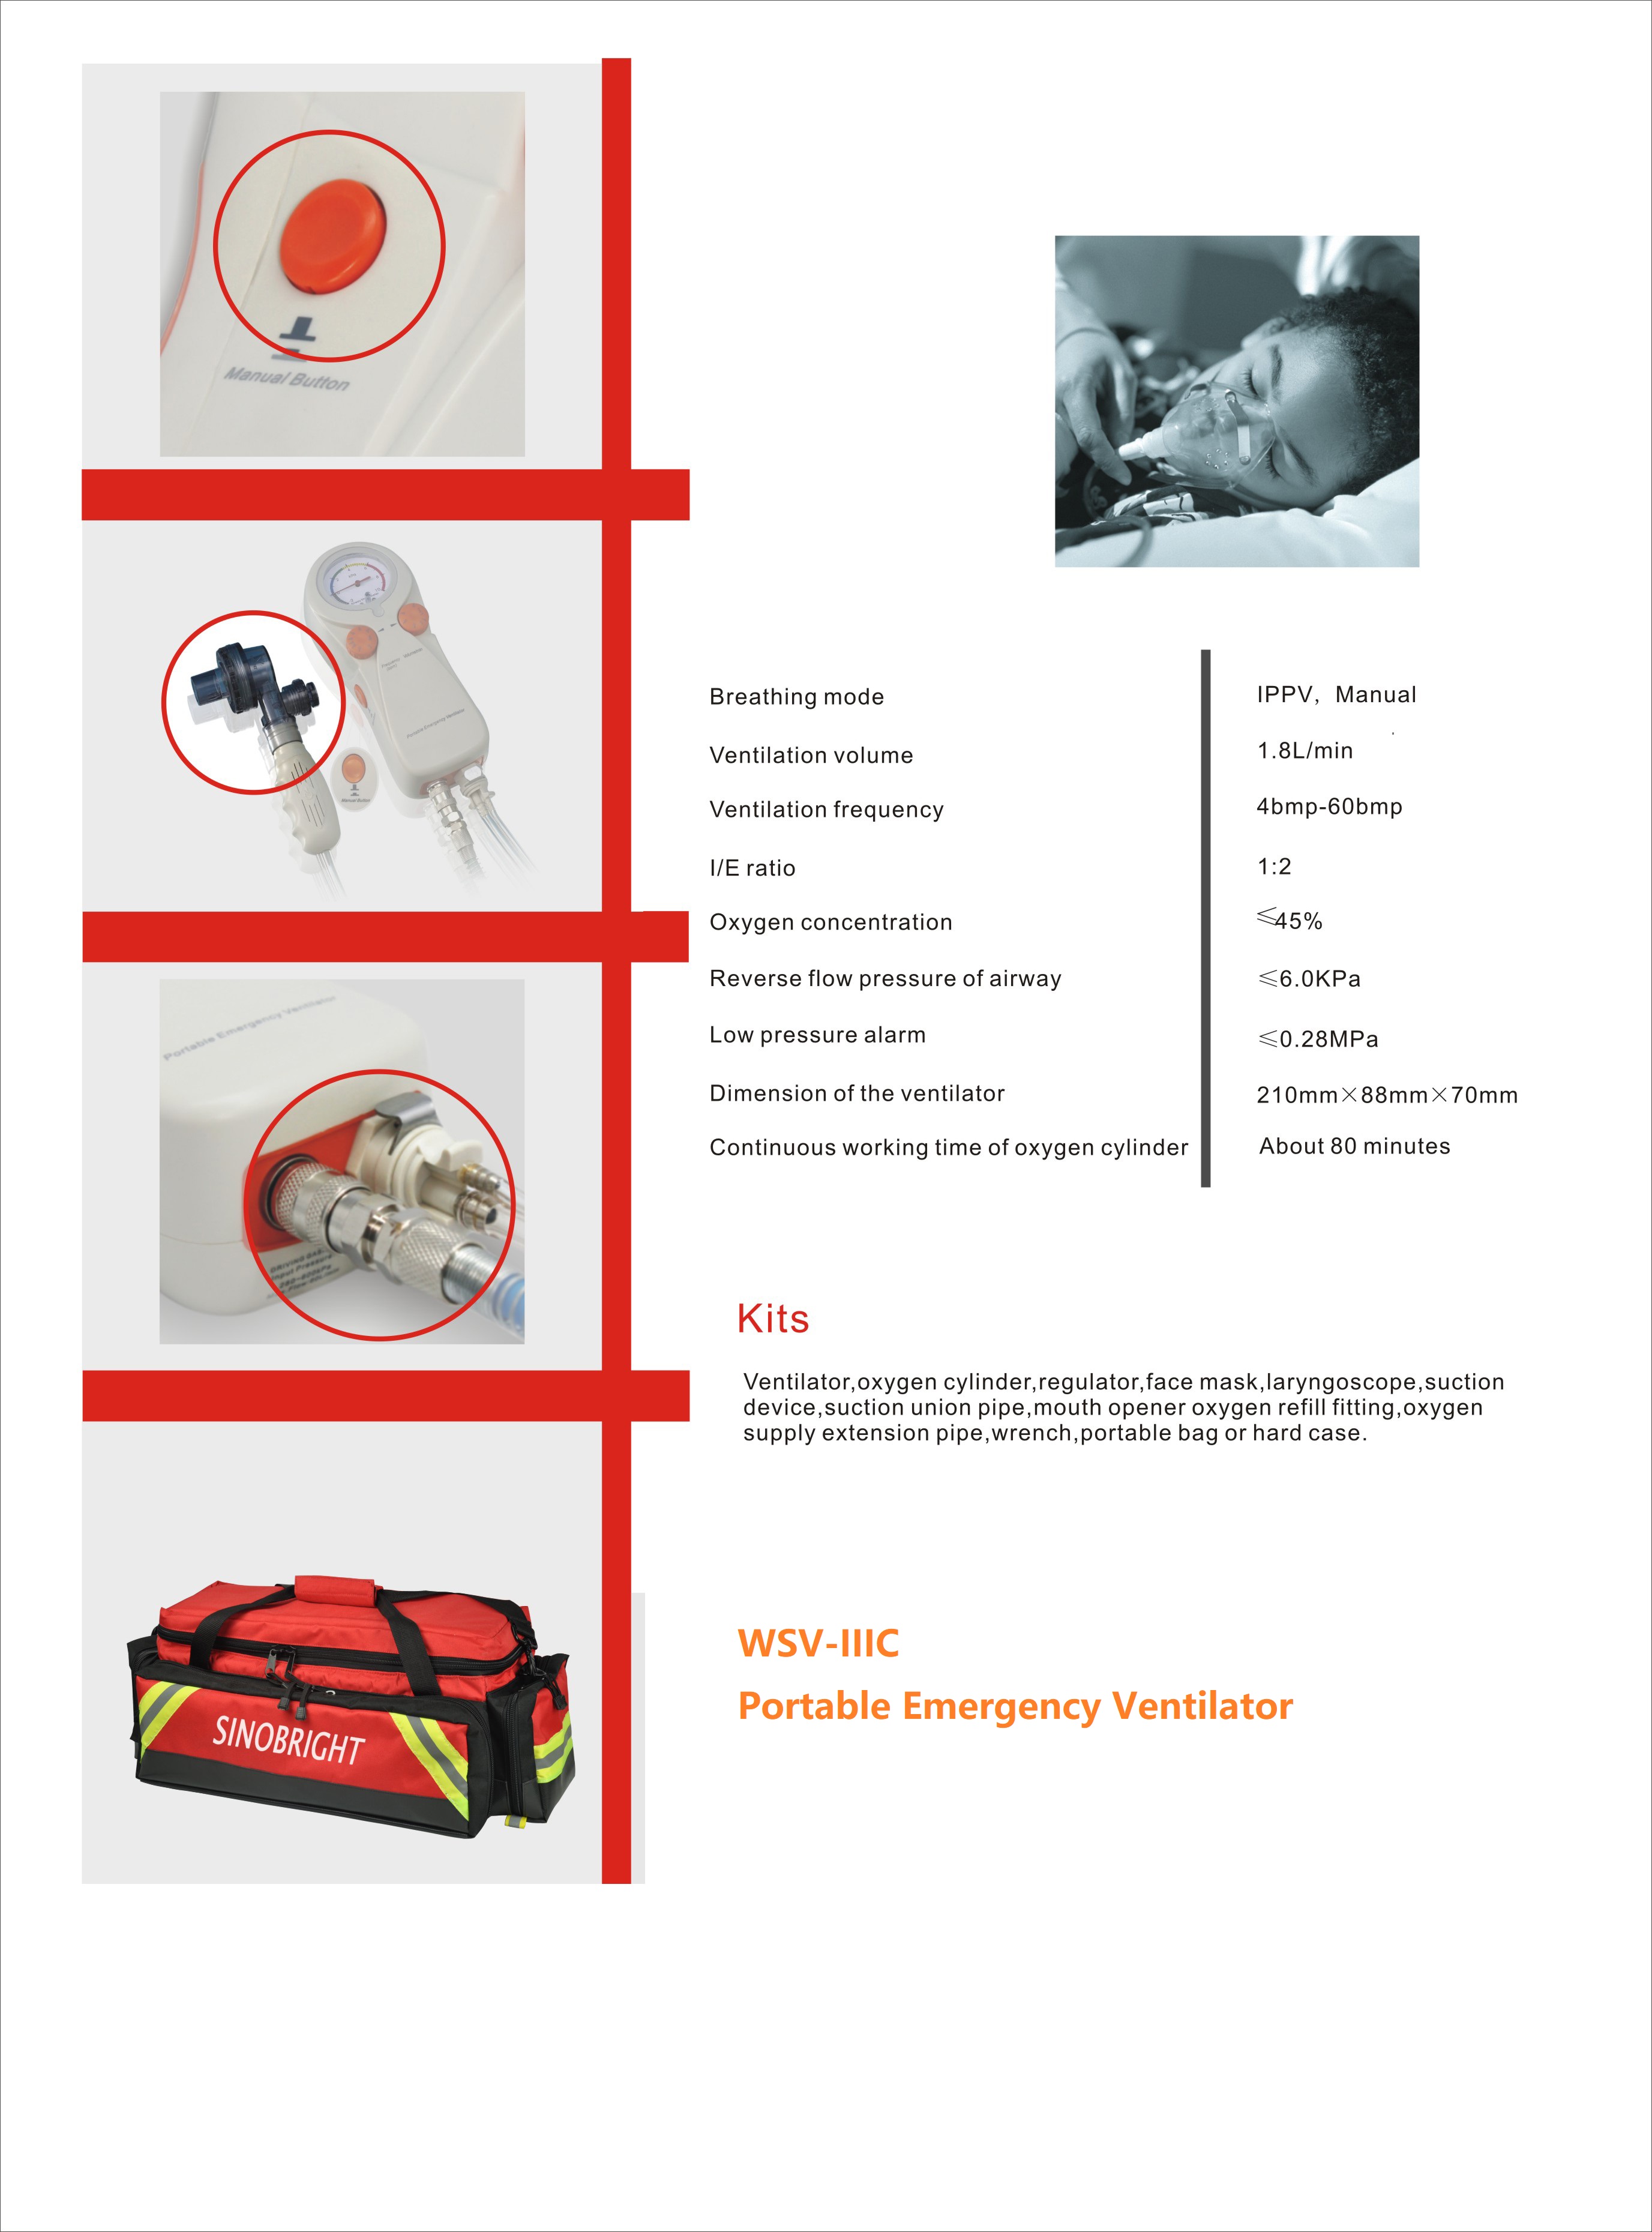 WSV-IIIC Portable Emergency Ventilator (1).jpg